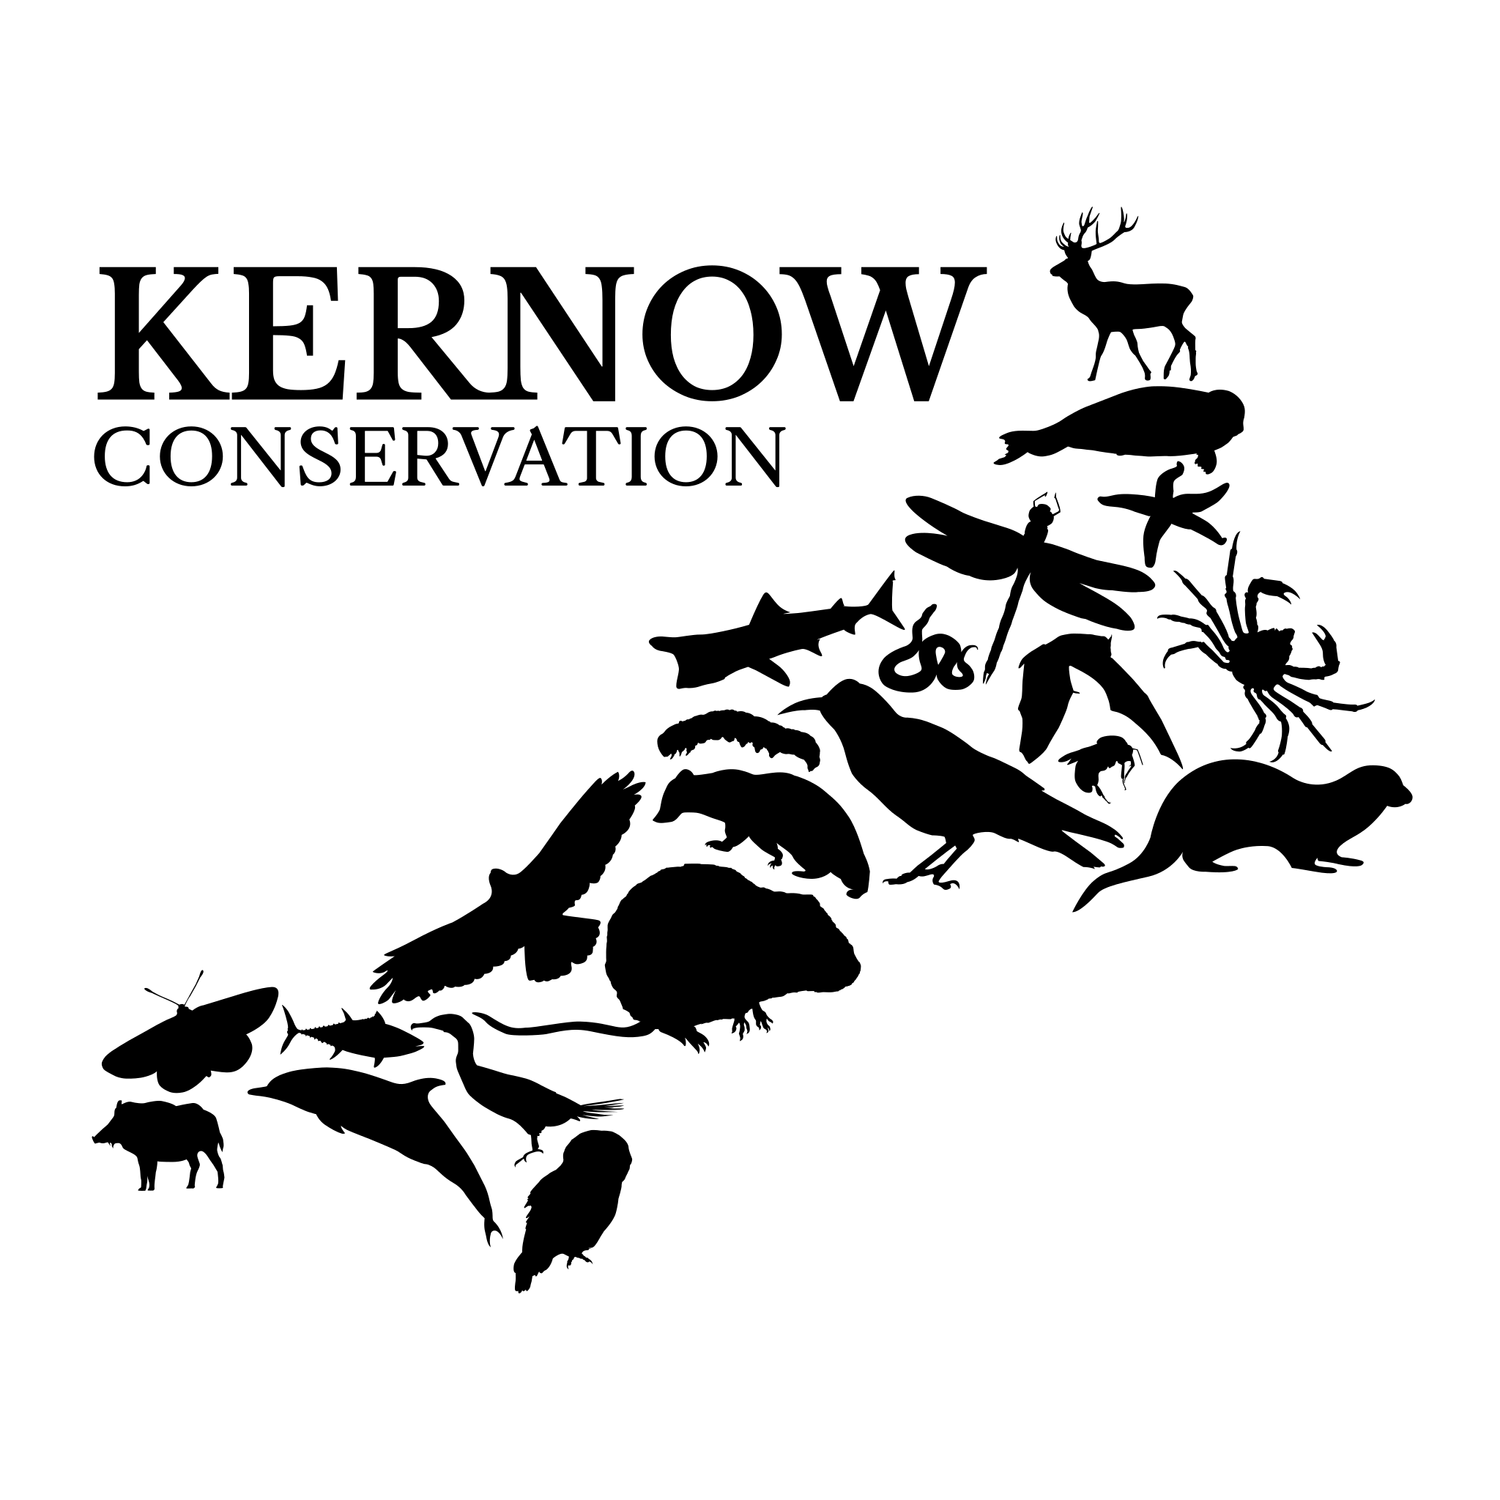 Kernow Conservation